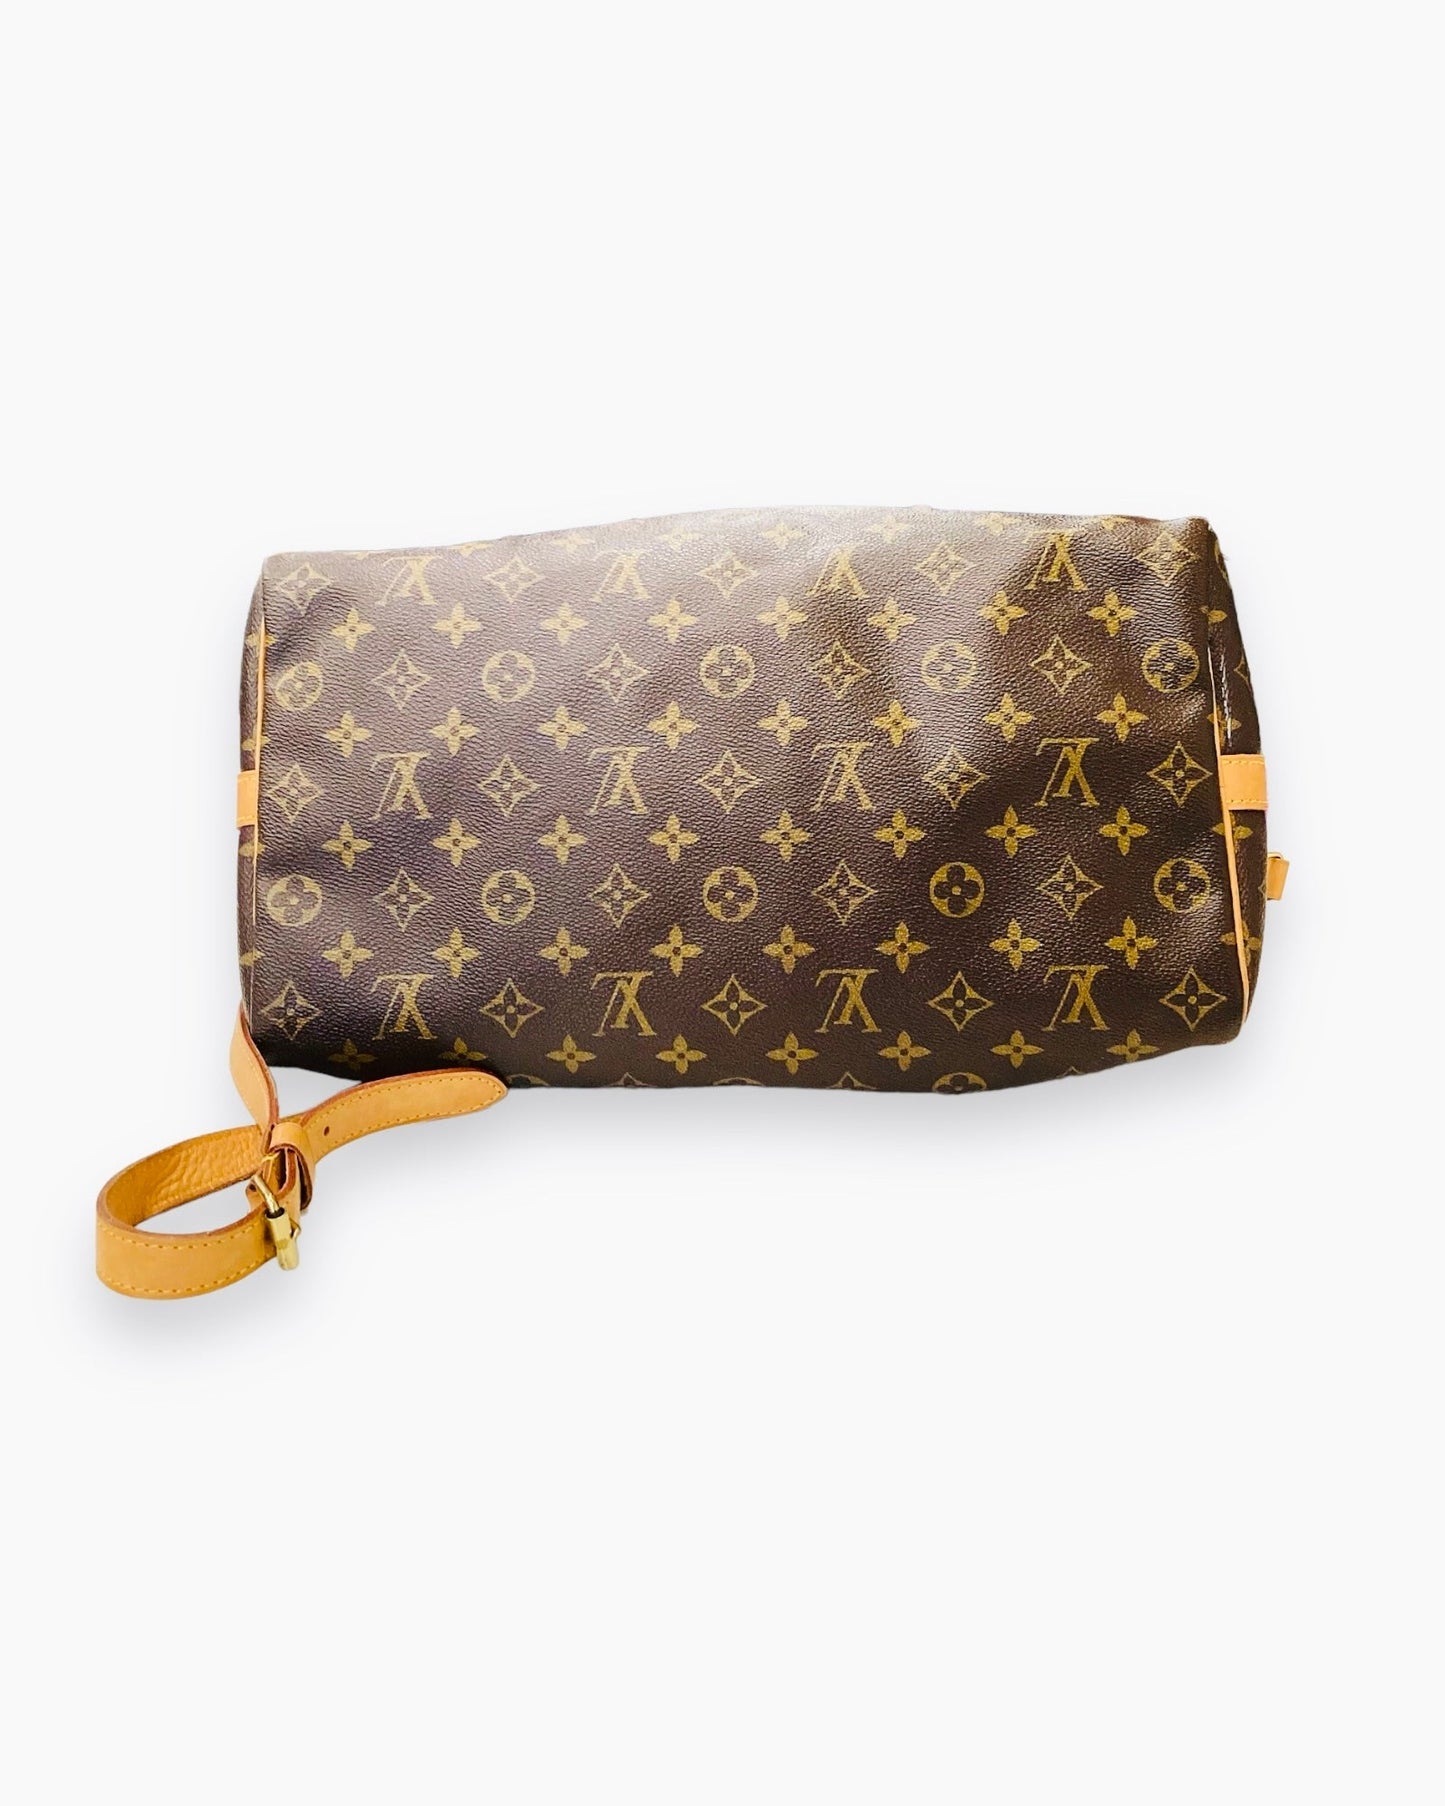 Luxury Designer Handbag by Louis Vuitton